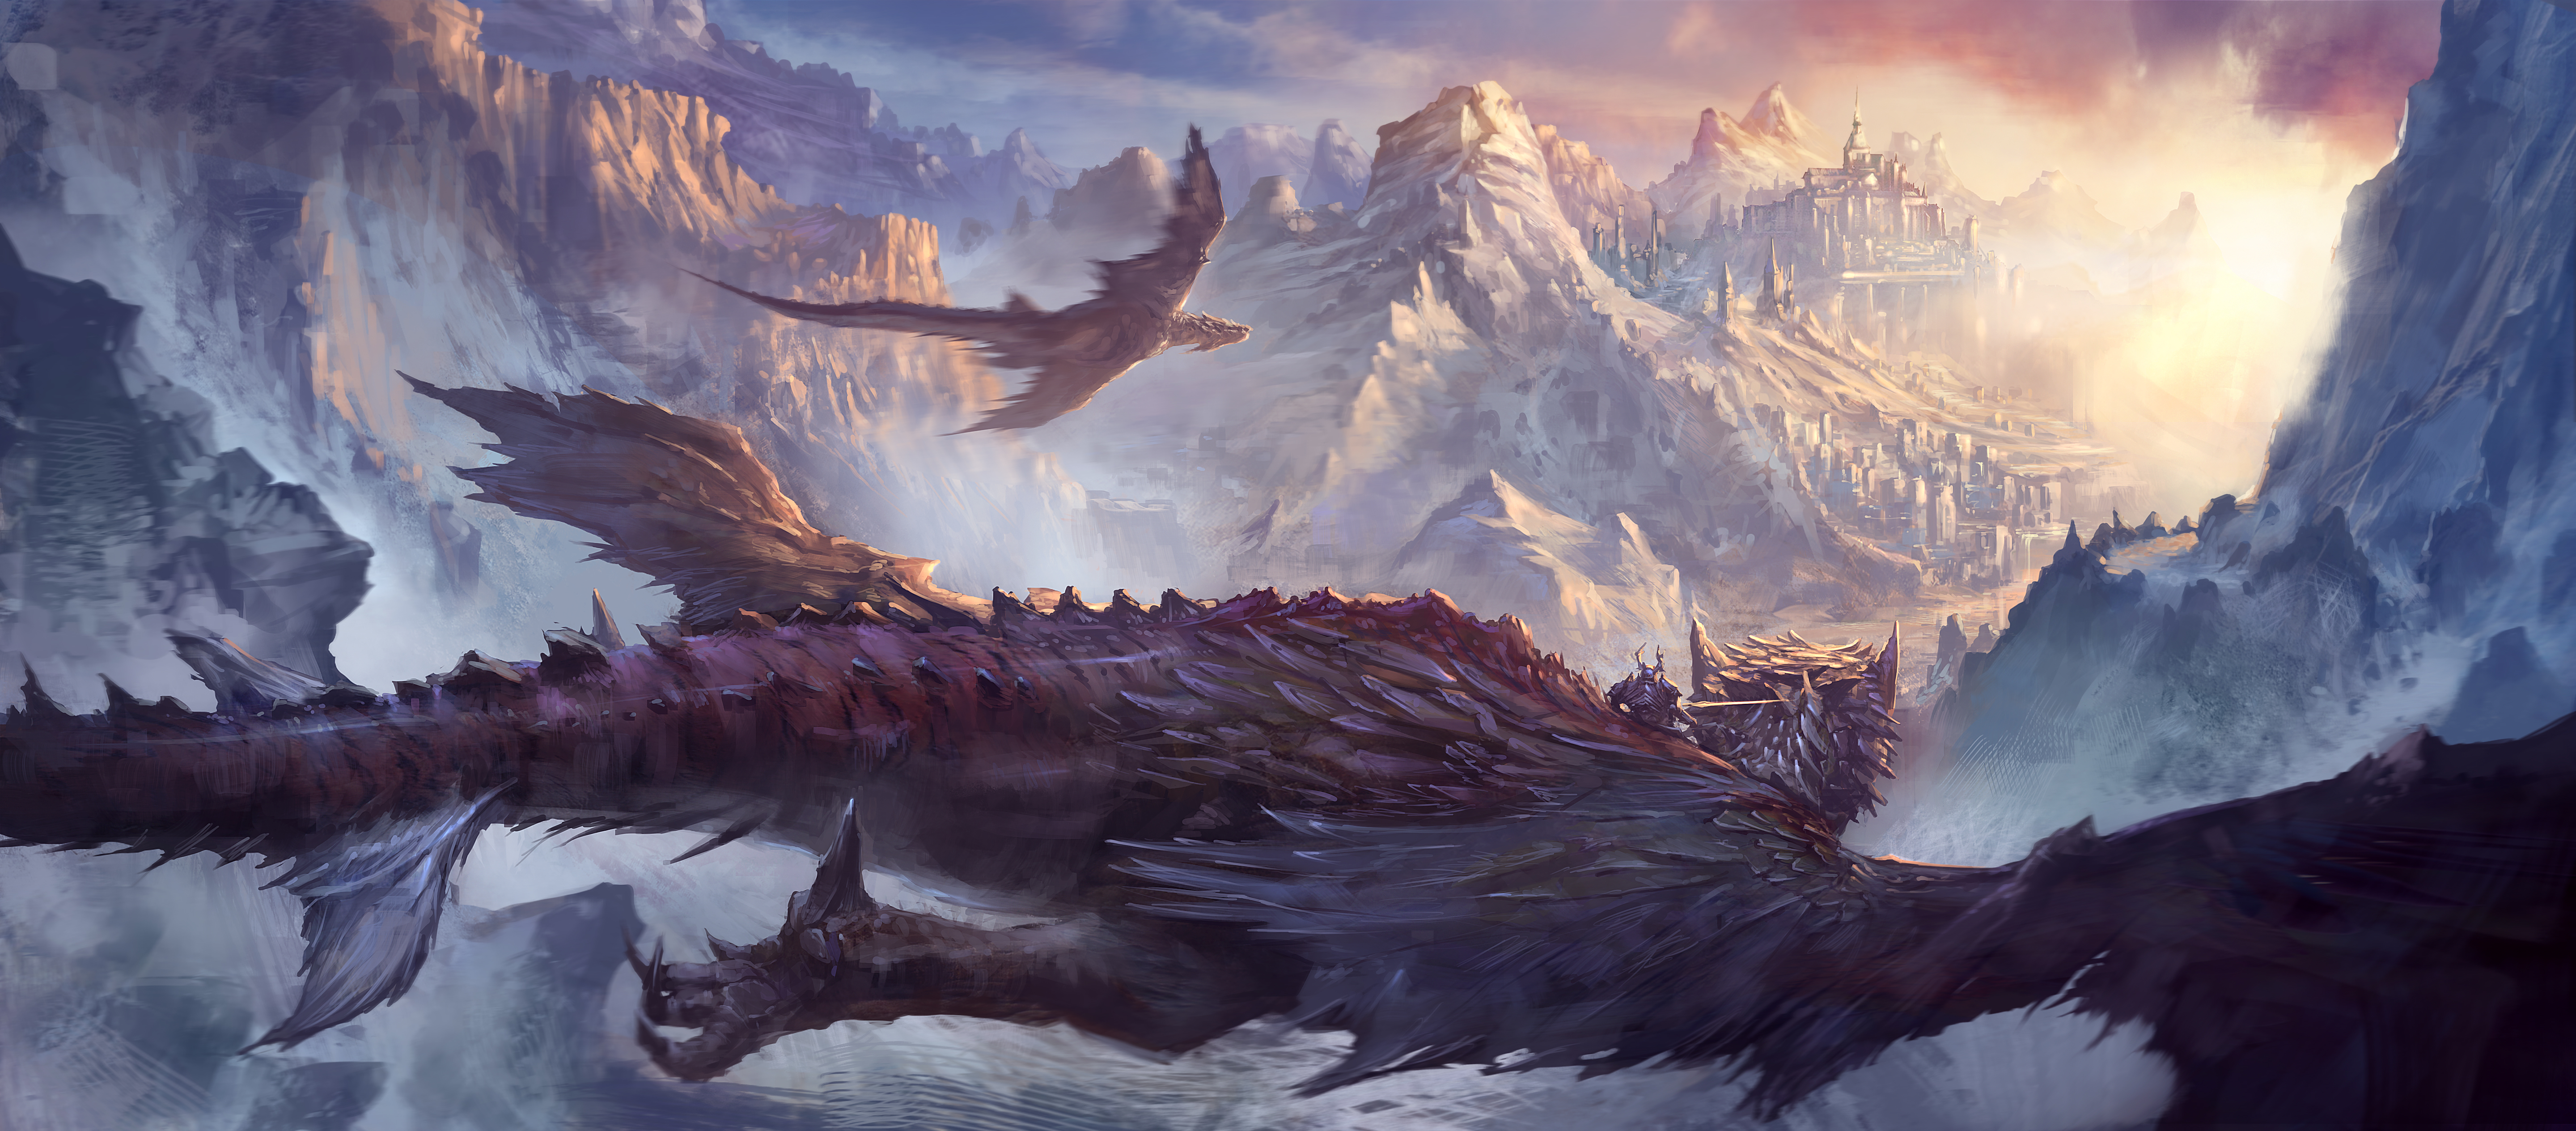 Fantasy Dragon 4k Ultra HD Wallpaper by Steve Chinhsuan Wang